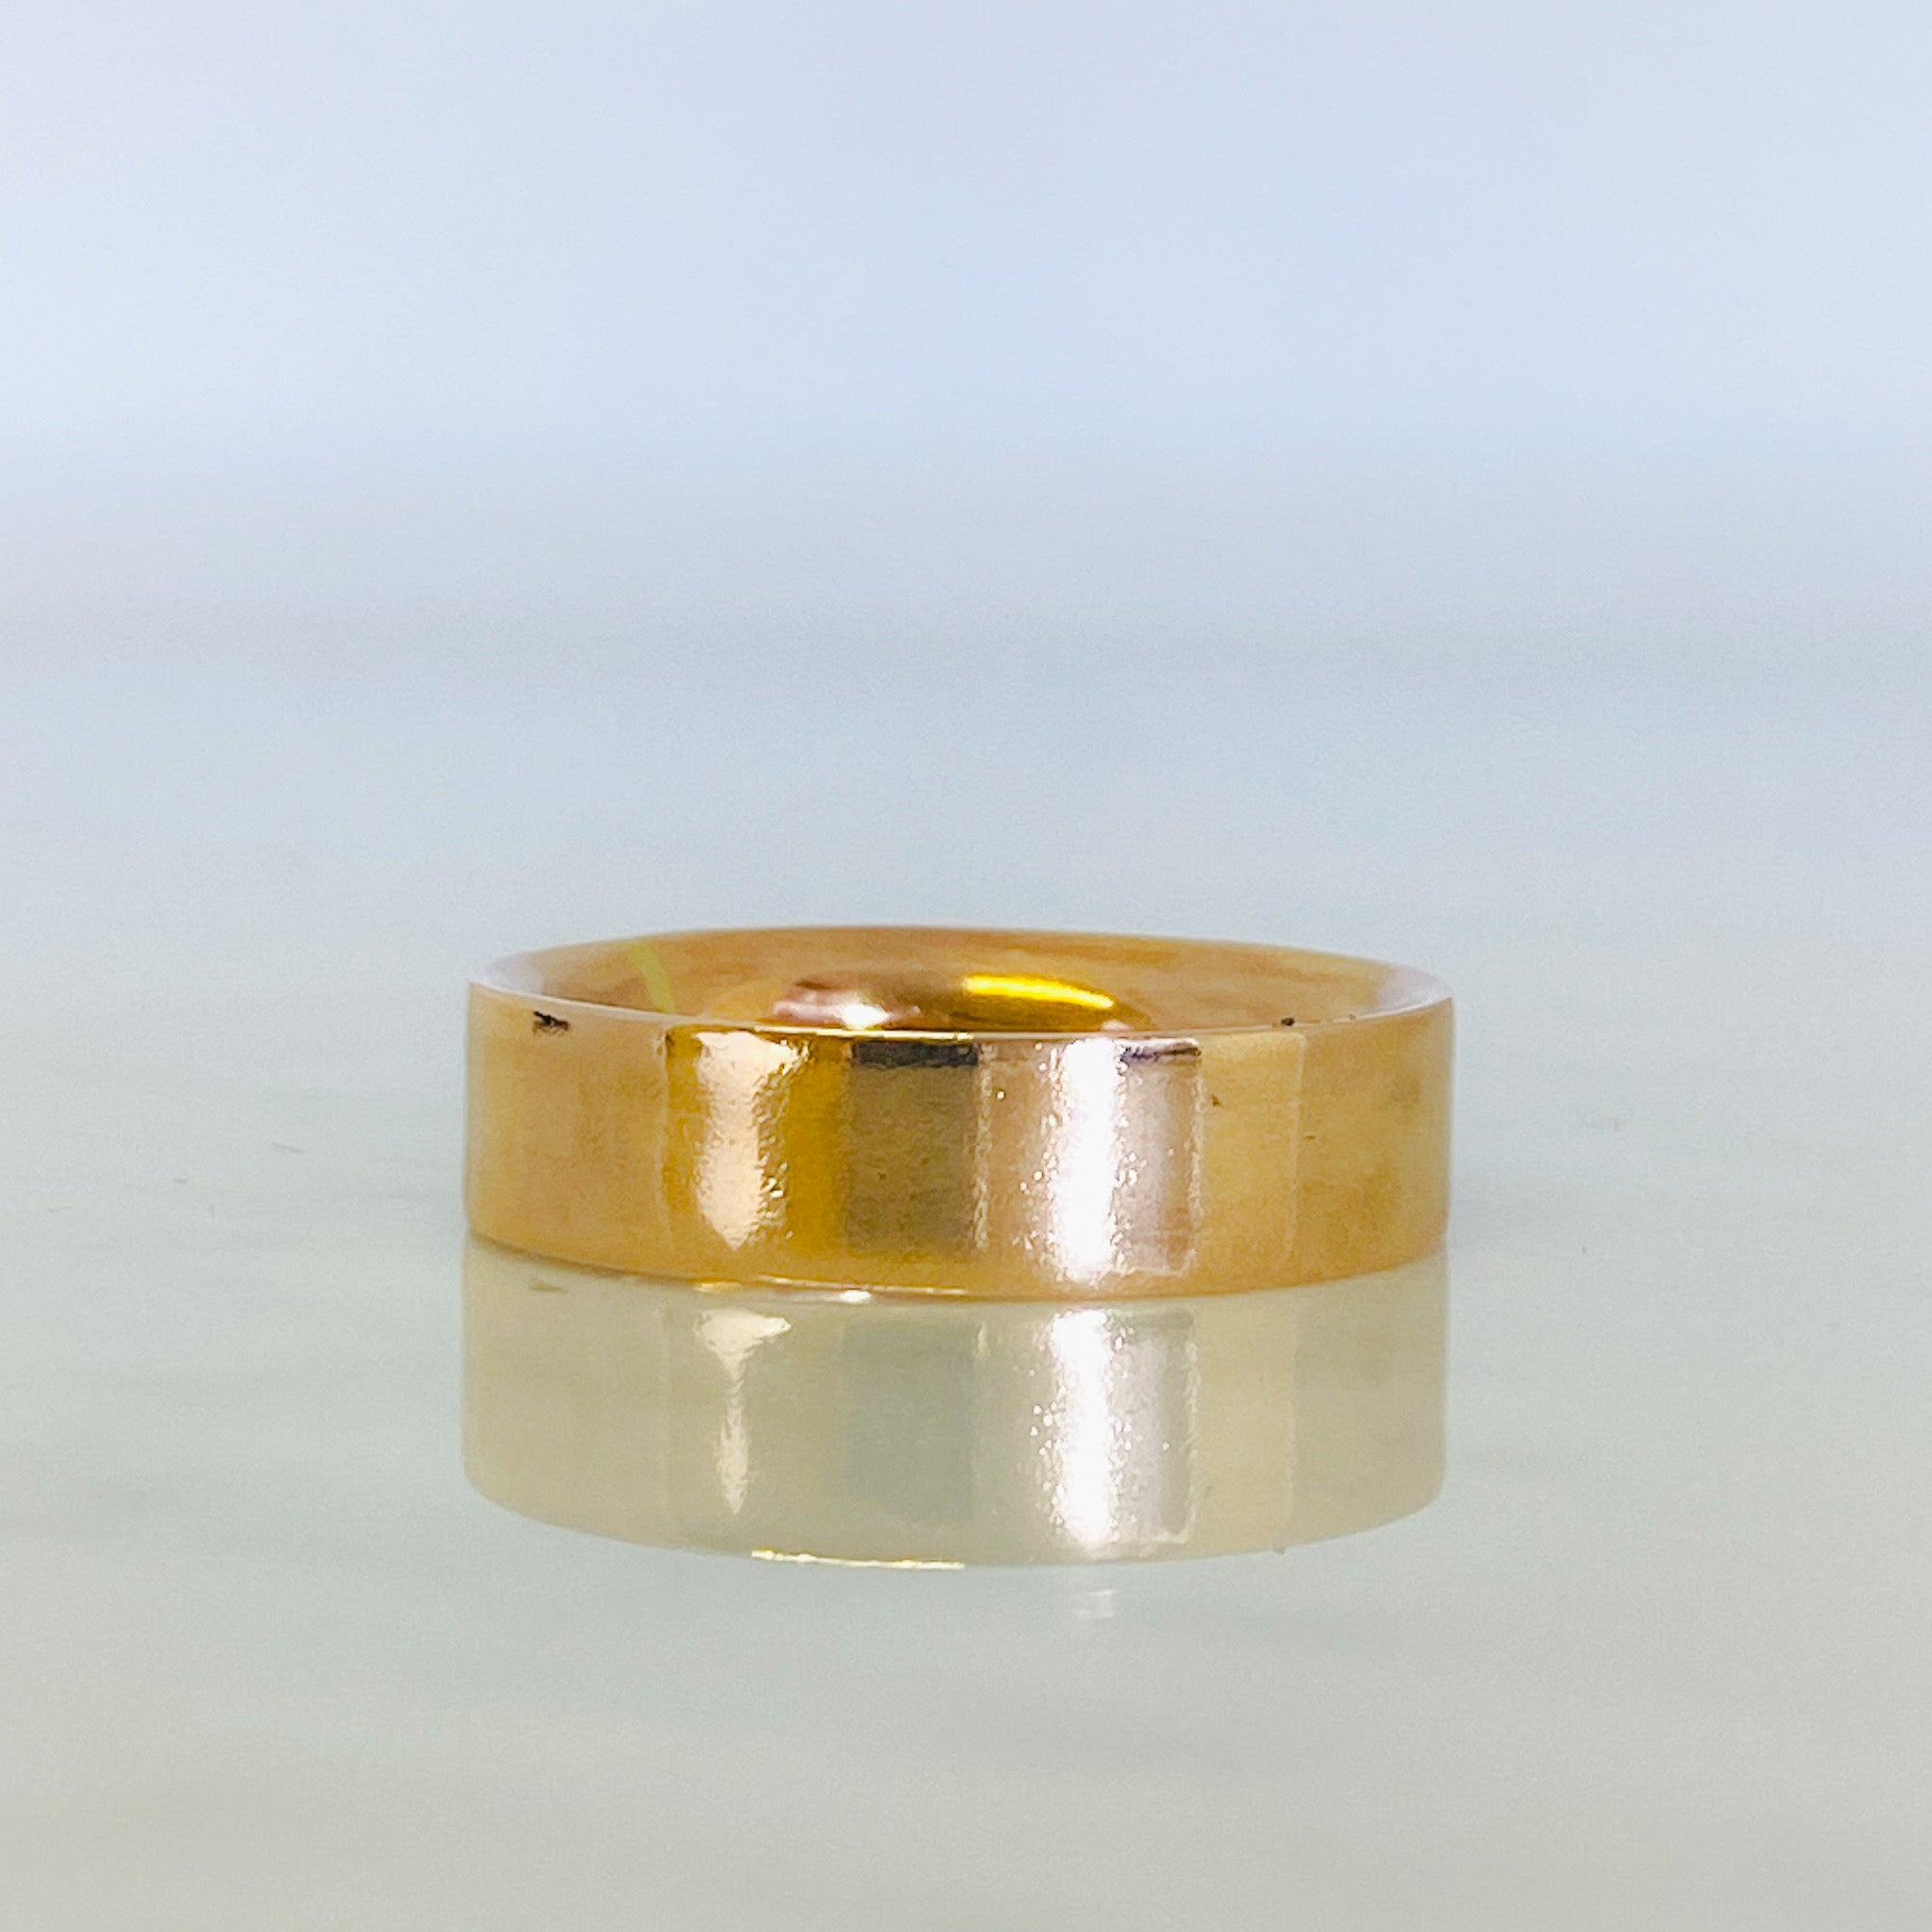 Rose Gold Classic Wedding Ring